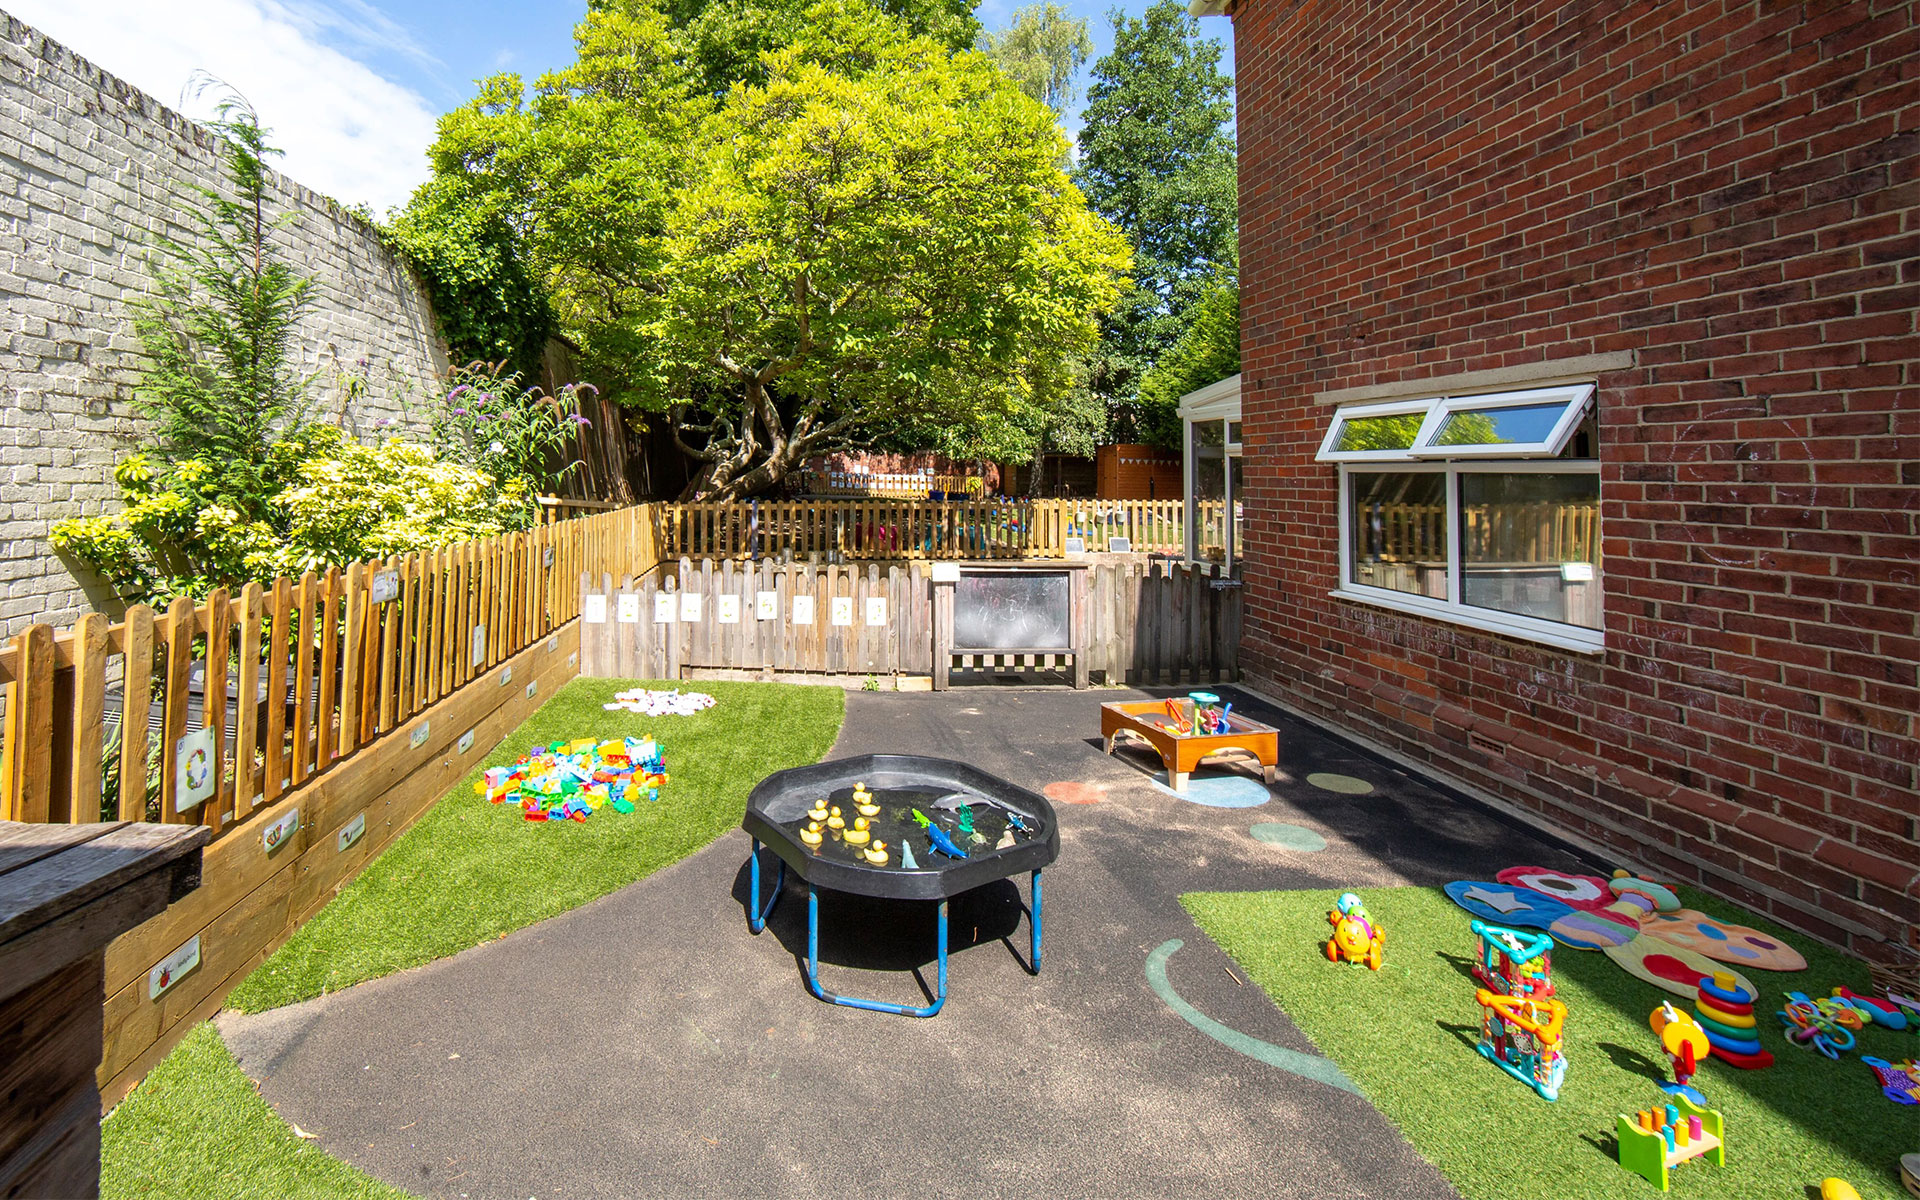 Portswood Day Nursery and Preschool